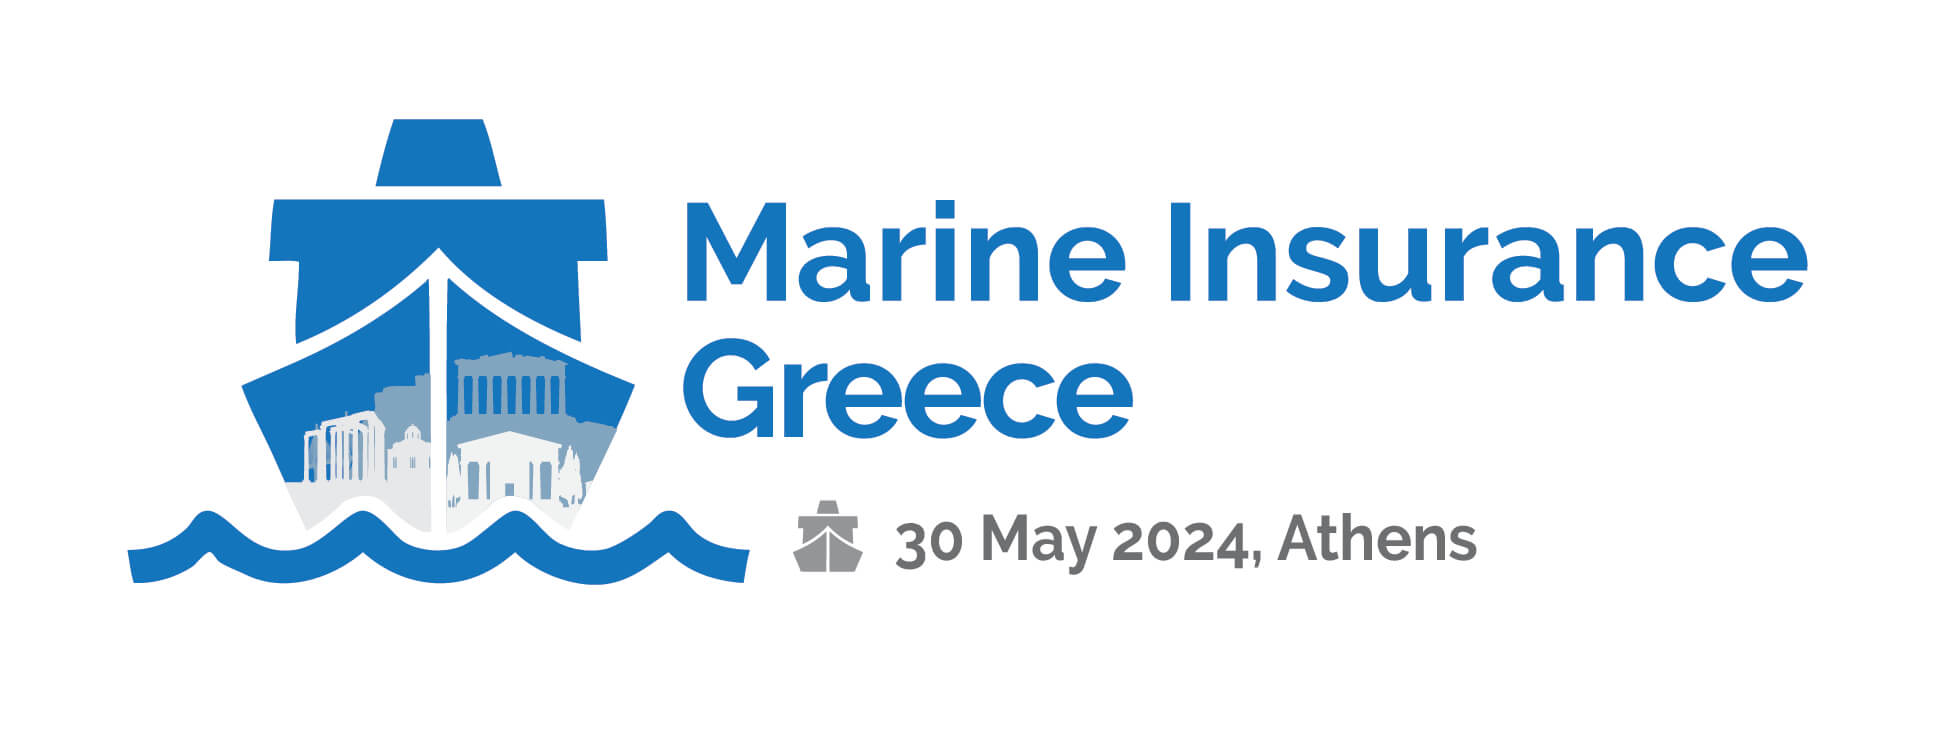 Marine Insurance Greece